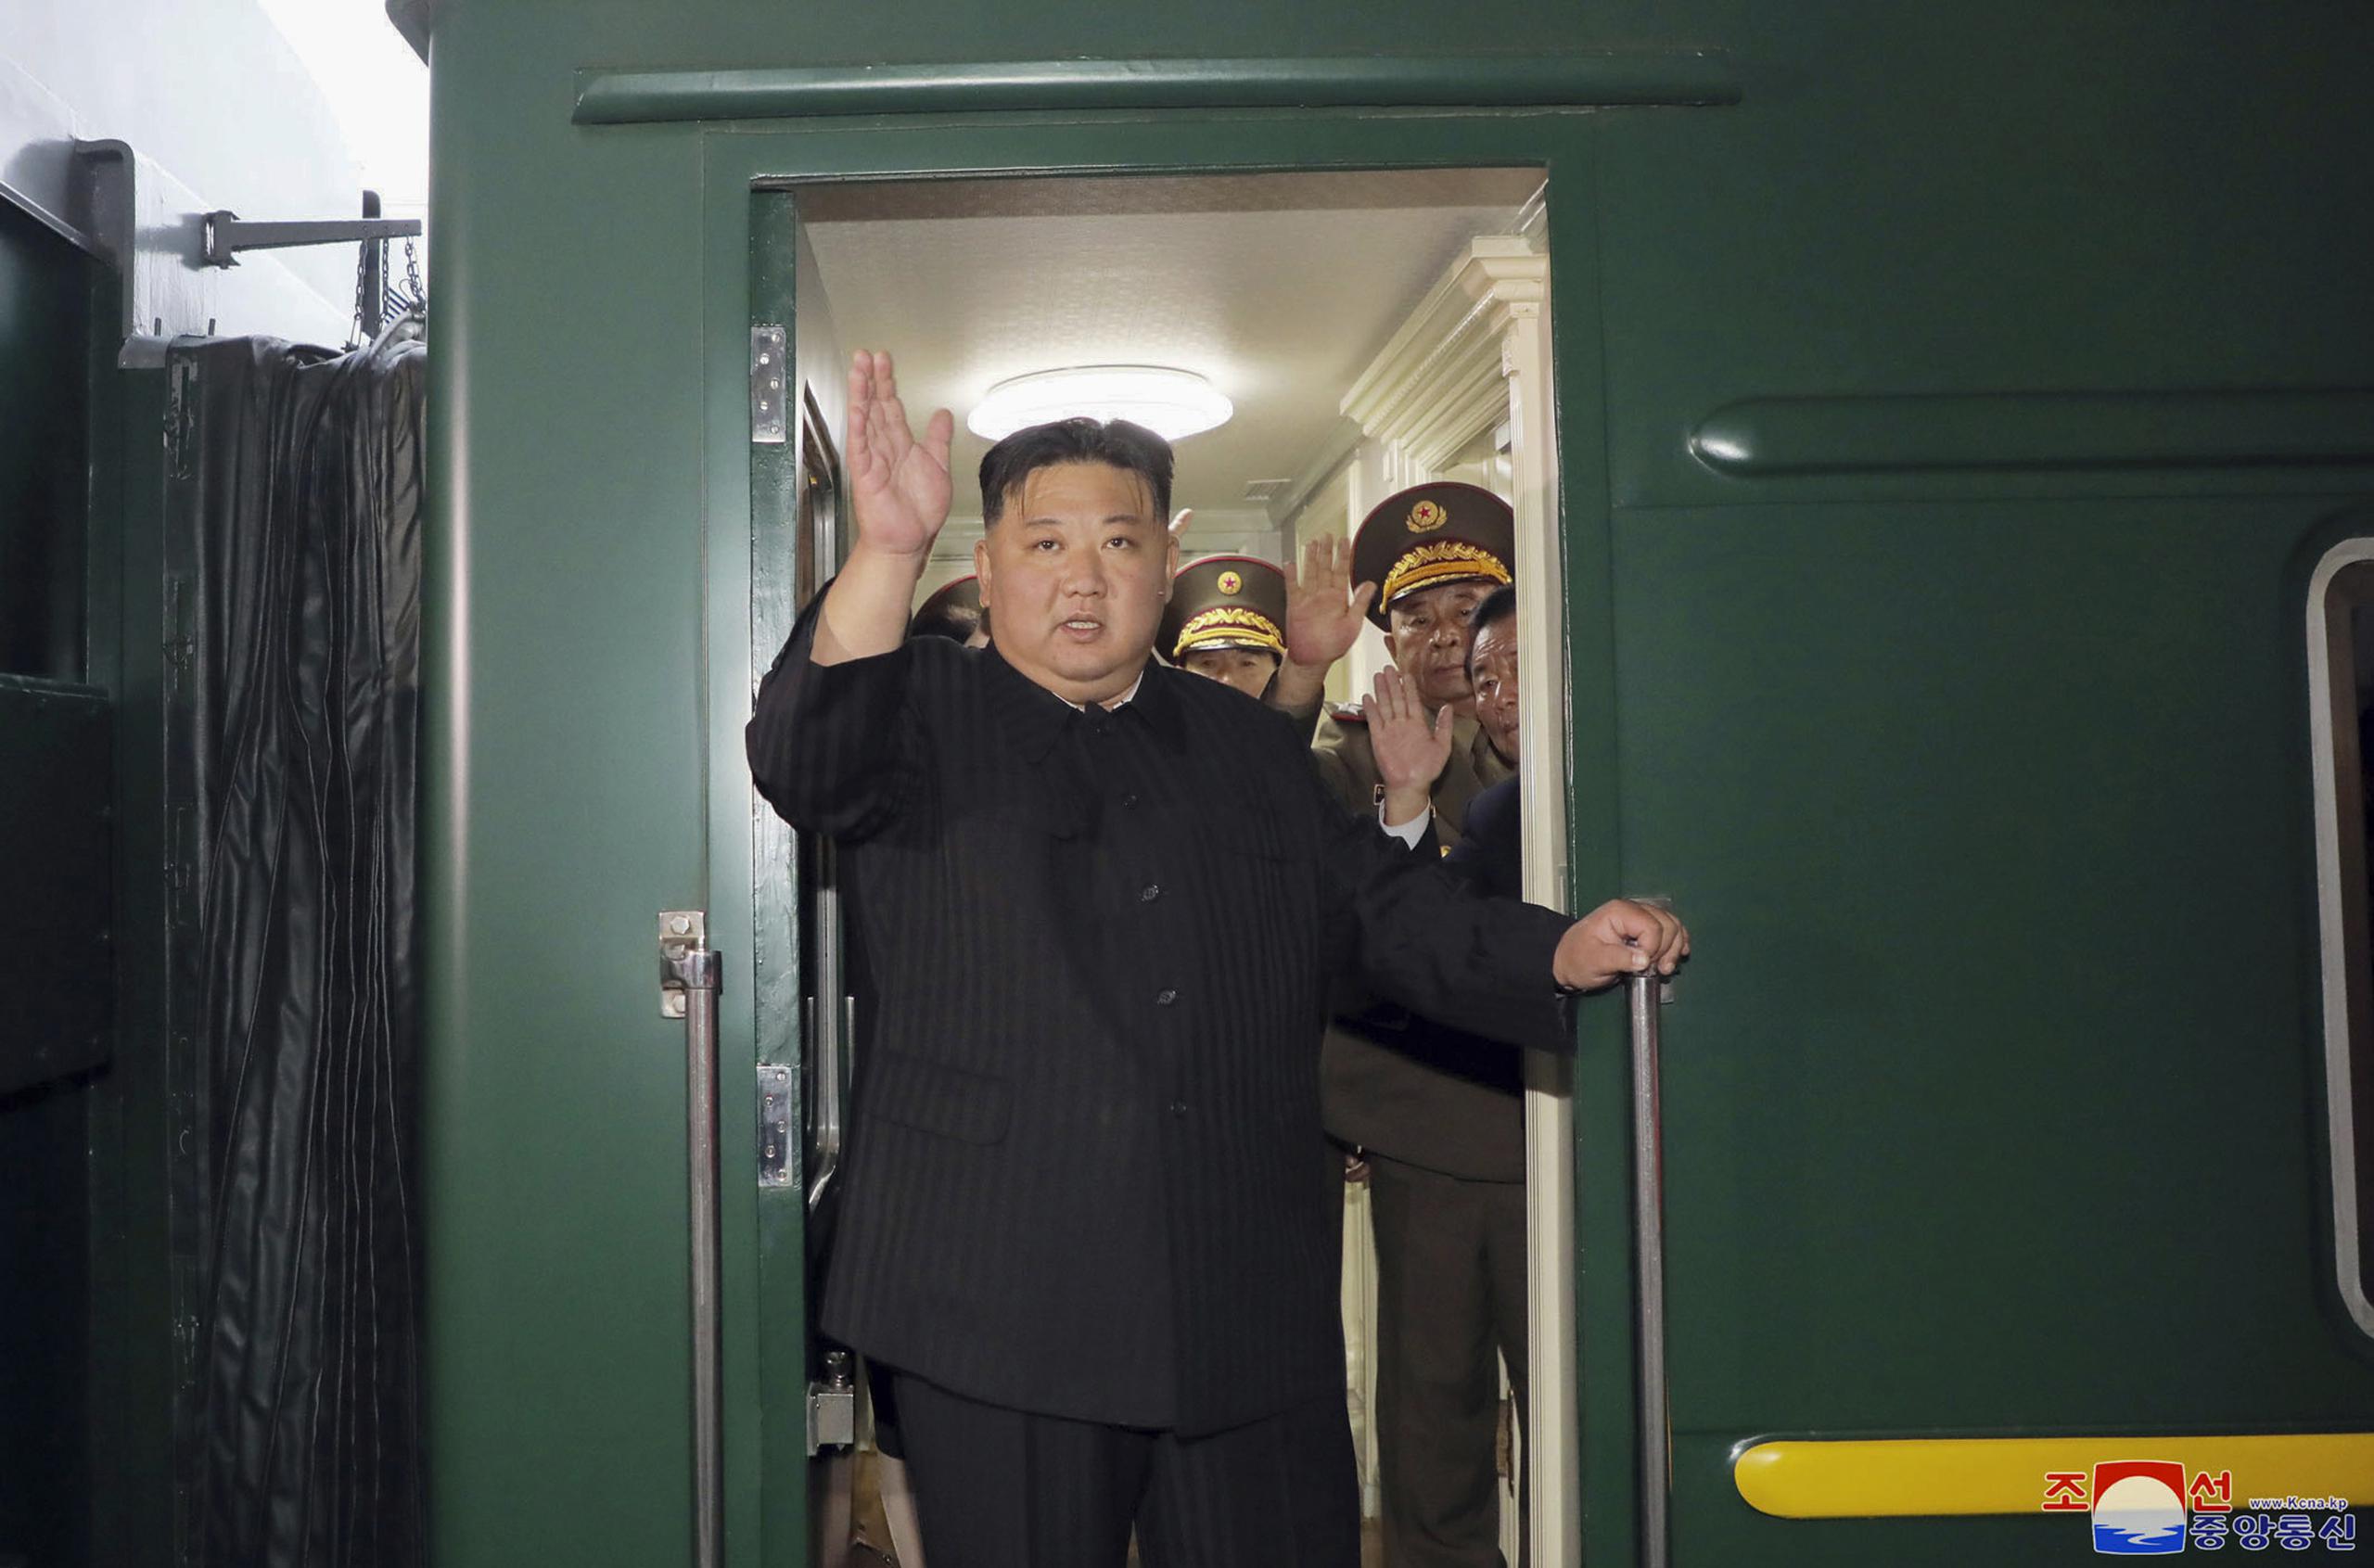 El líder norcoreano, Kim Jong Un (Agencia Central de Noticias de Corea/Korea News Service vía AP)